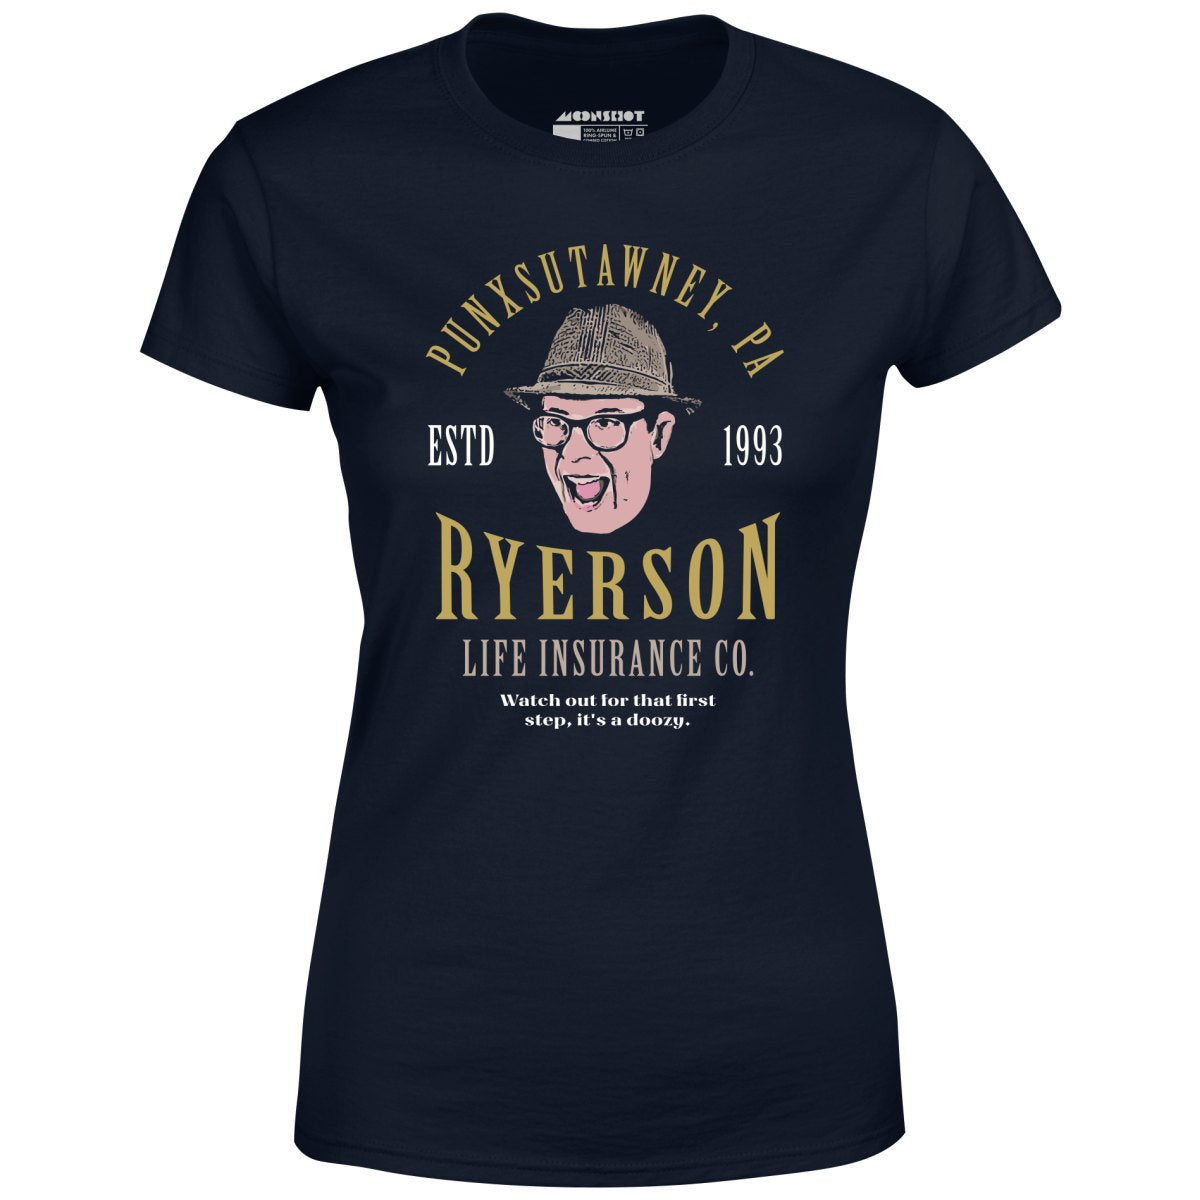 Ned Ryerson Life Insurance Co. - Women's T-Shirt